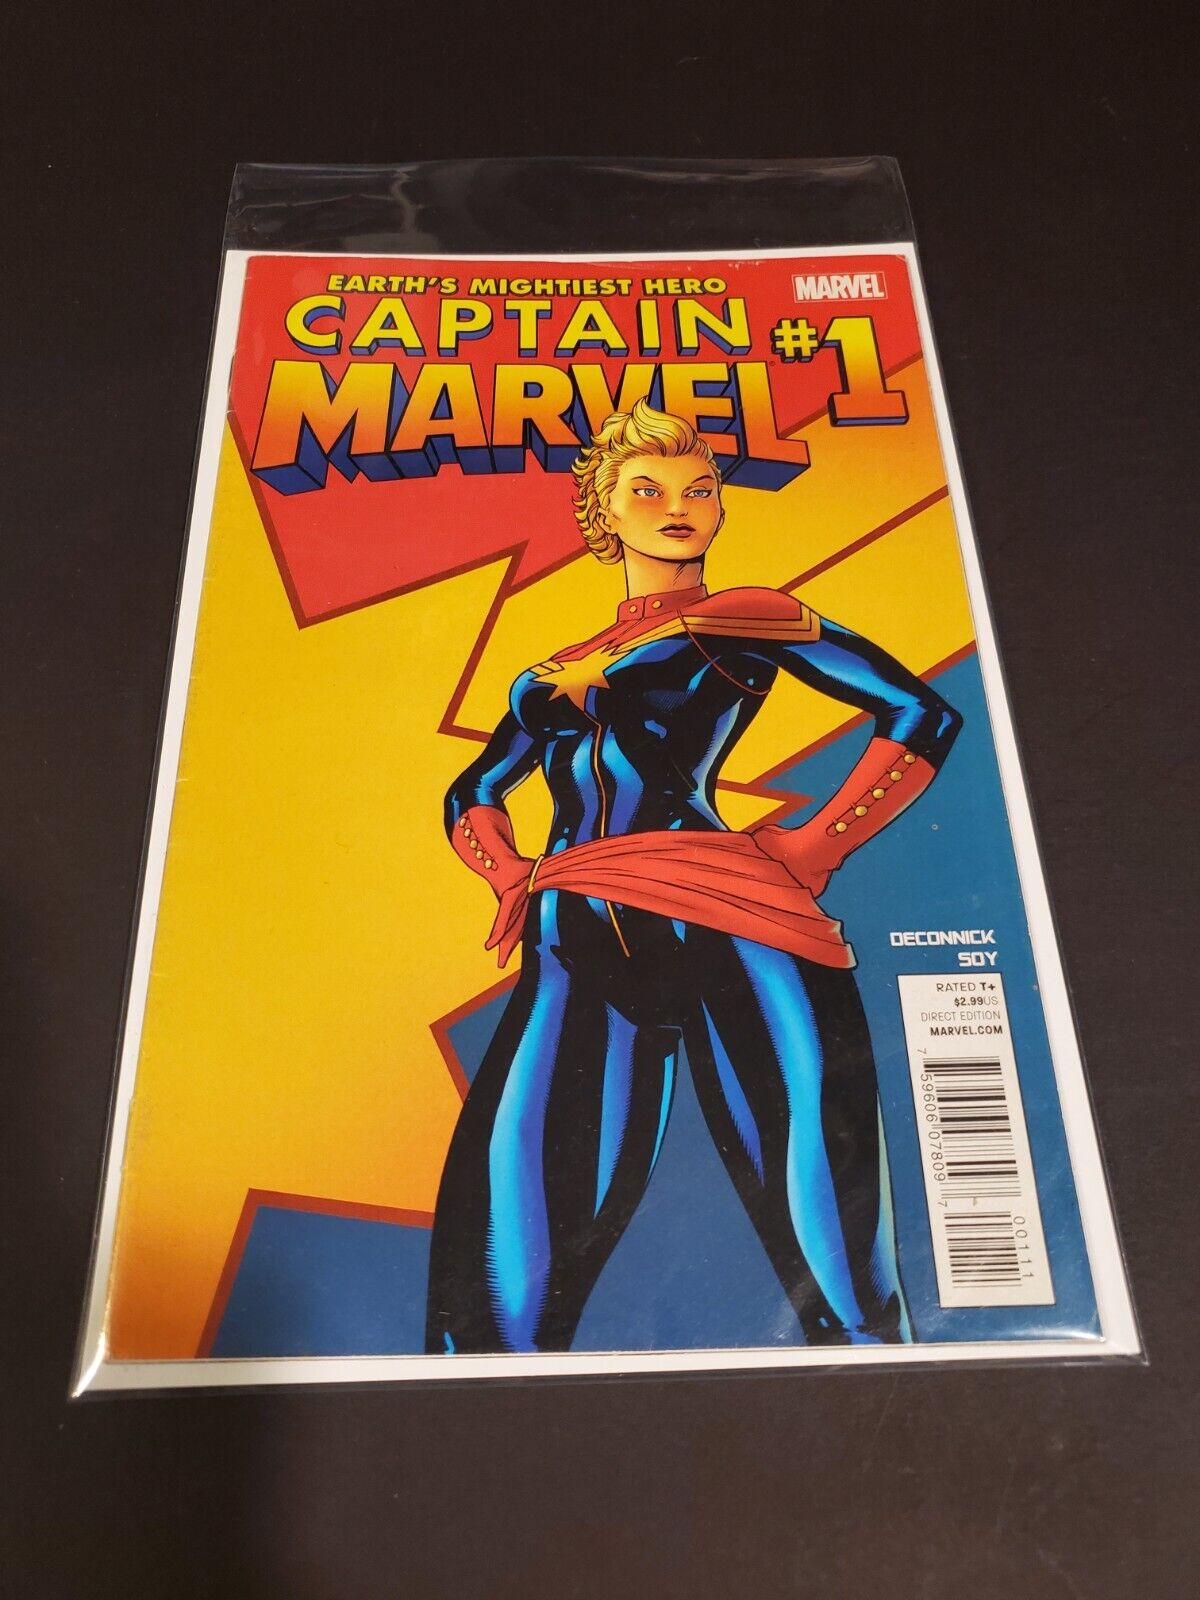 Captain Marvel #1 (Marvel, Sept 2012) ☆ Authentic ☆